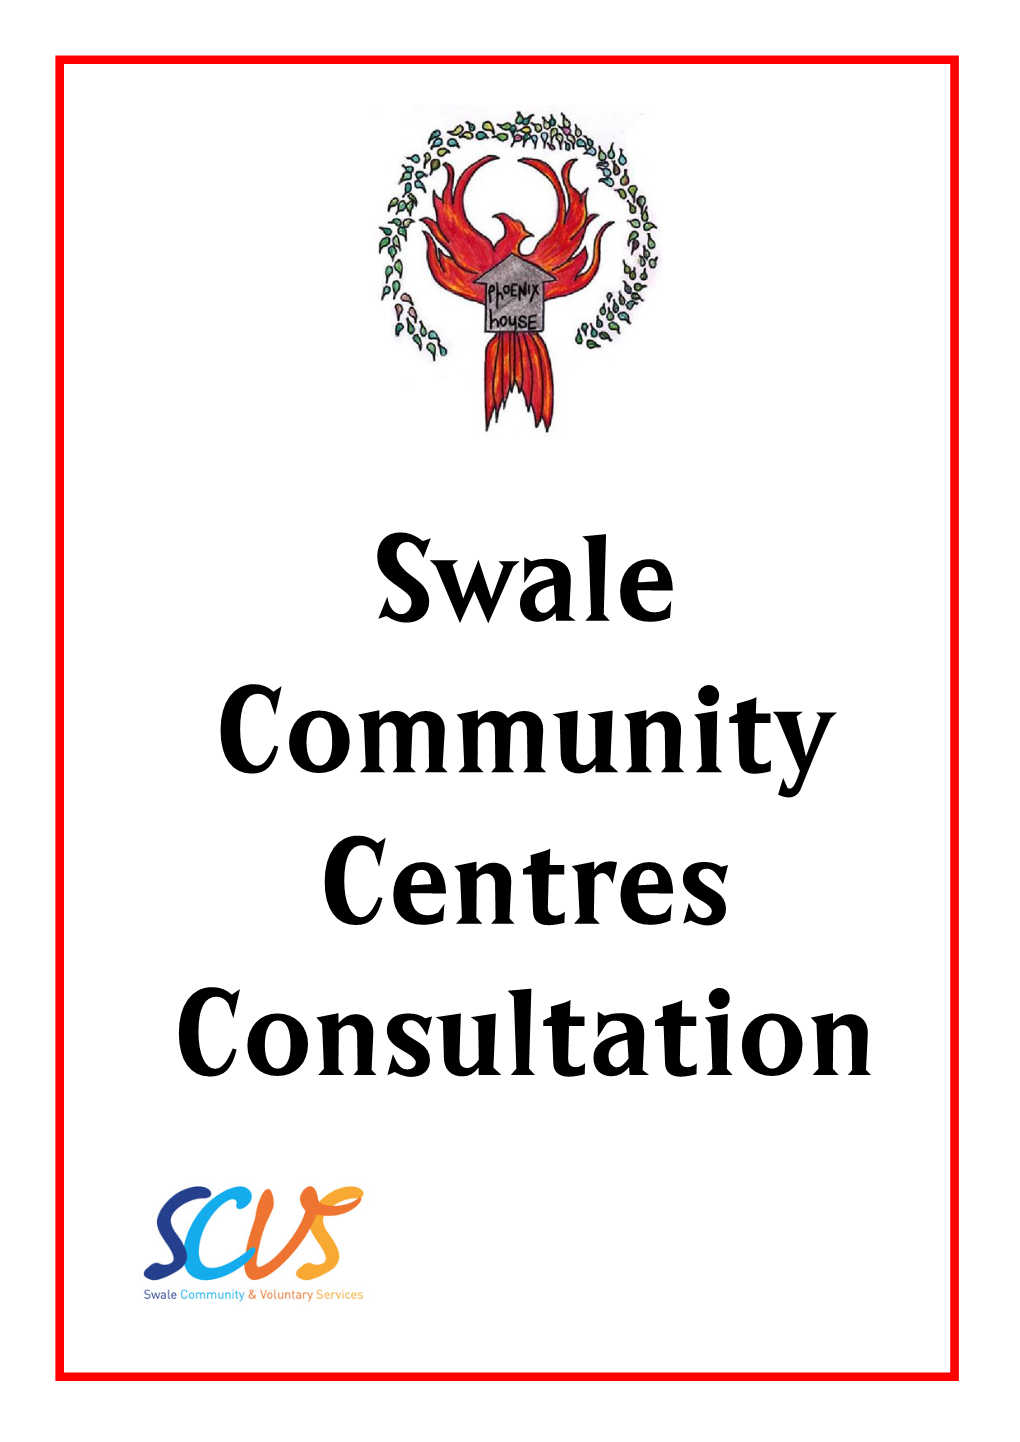 Swale Community Centers Consultation.Pdf